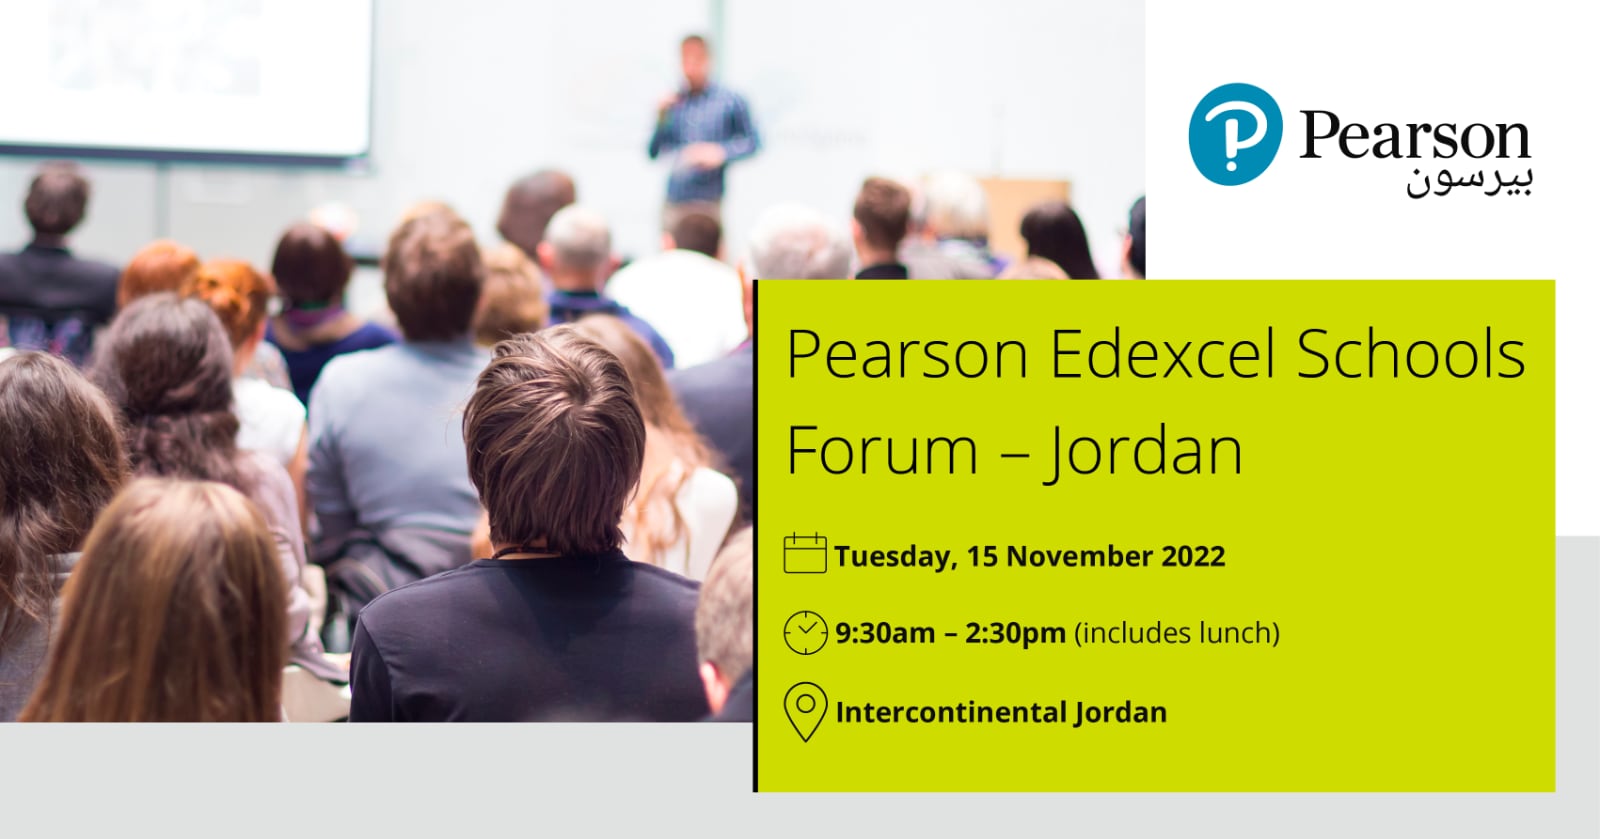 Pearson Edexcel Schools Forum in Jordan